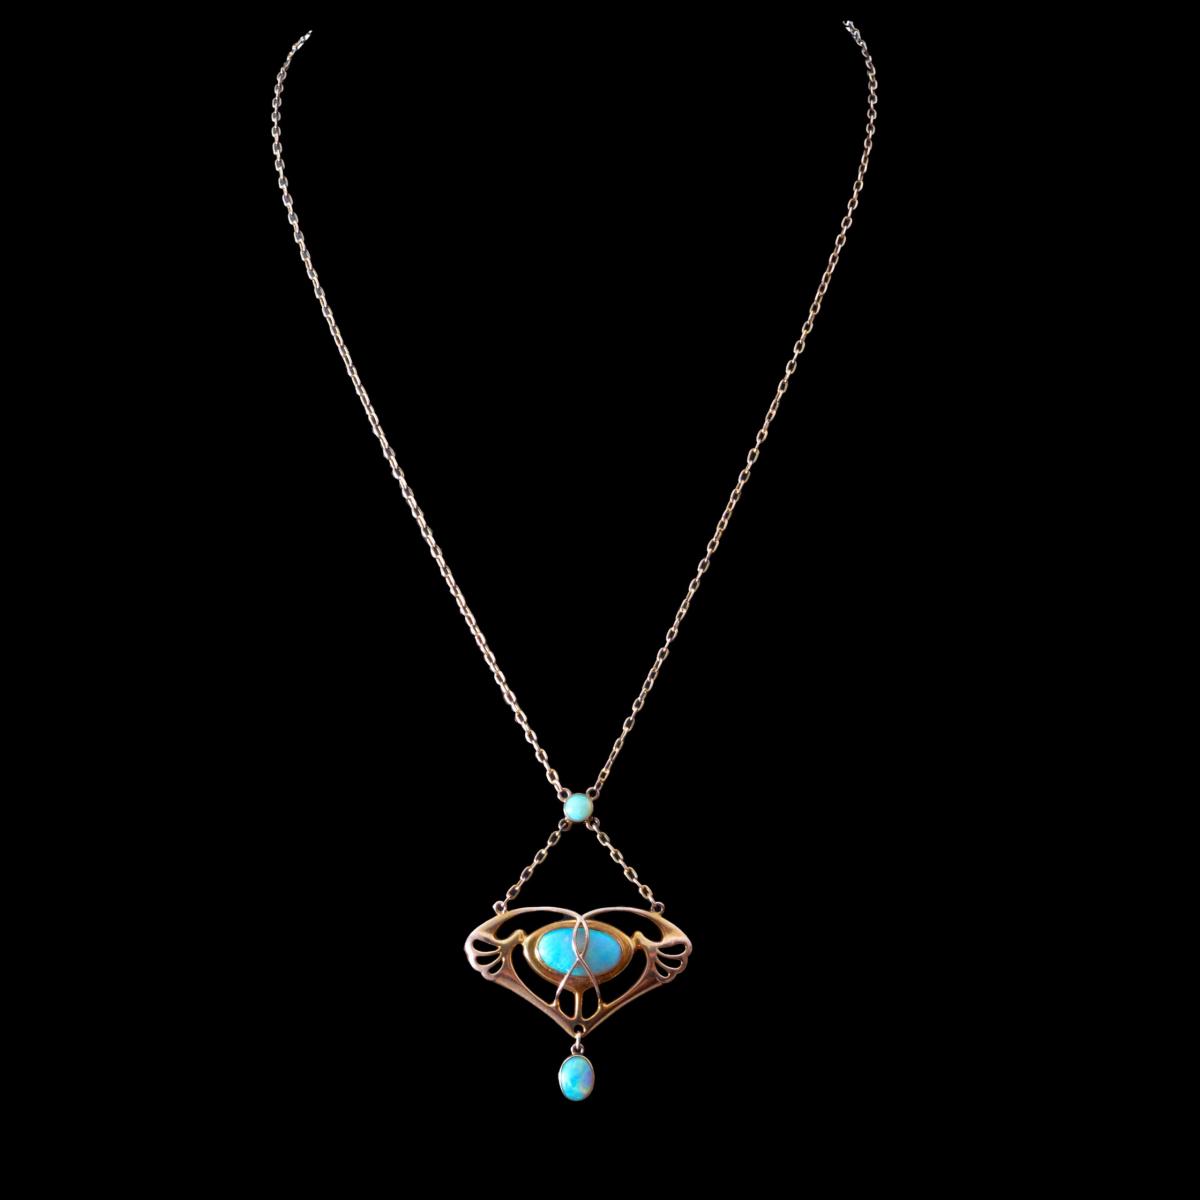 A Barnet Henry Joseph gold and opal pendant